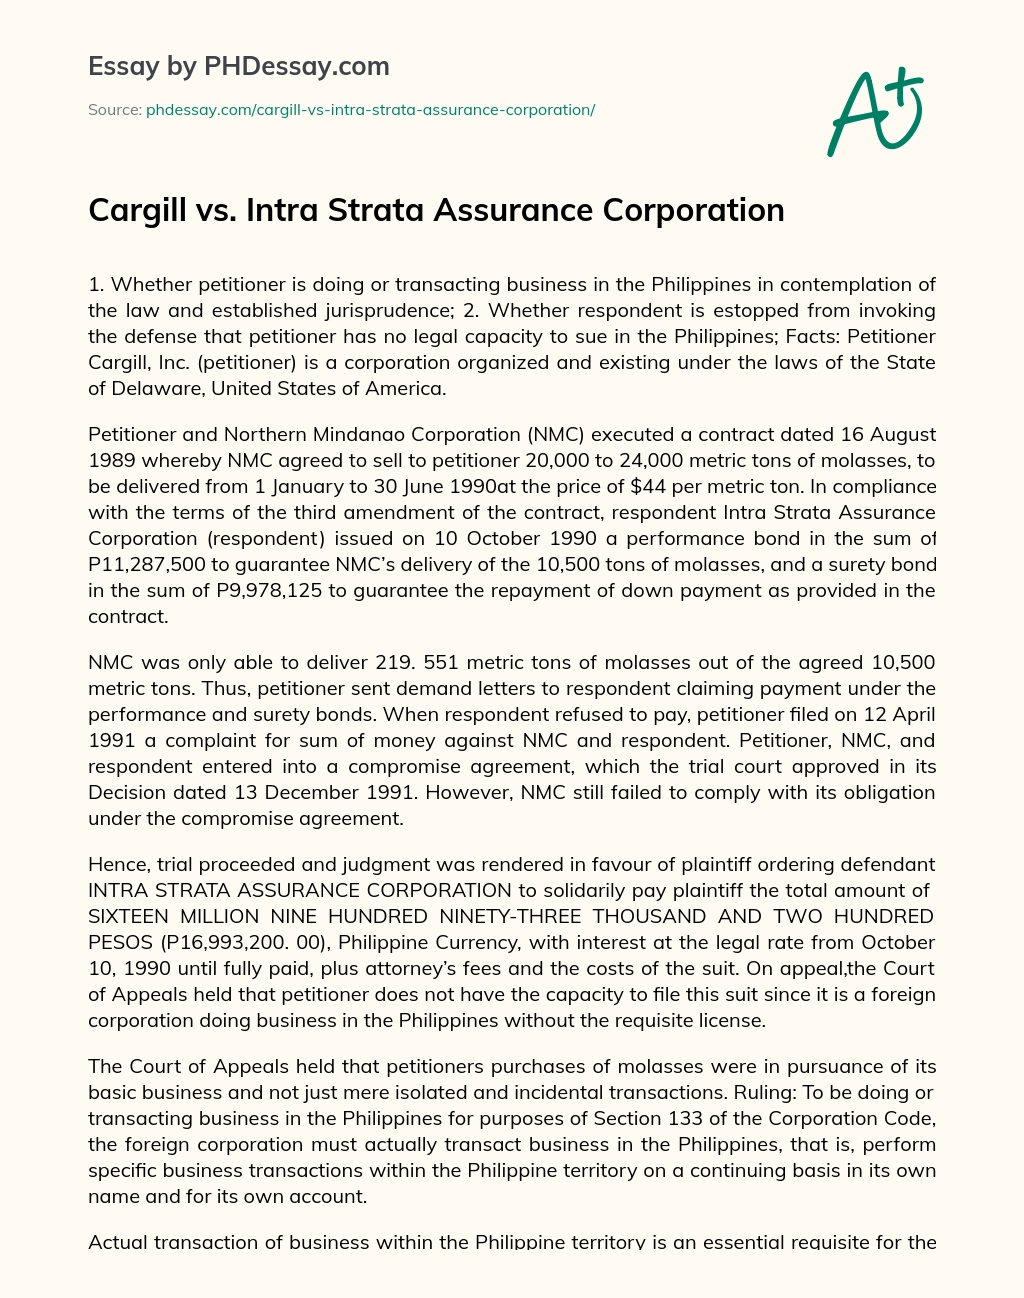 Cargill vs. Intra Strata Assurance Corporation essay